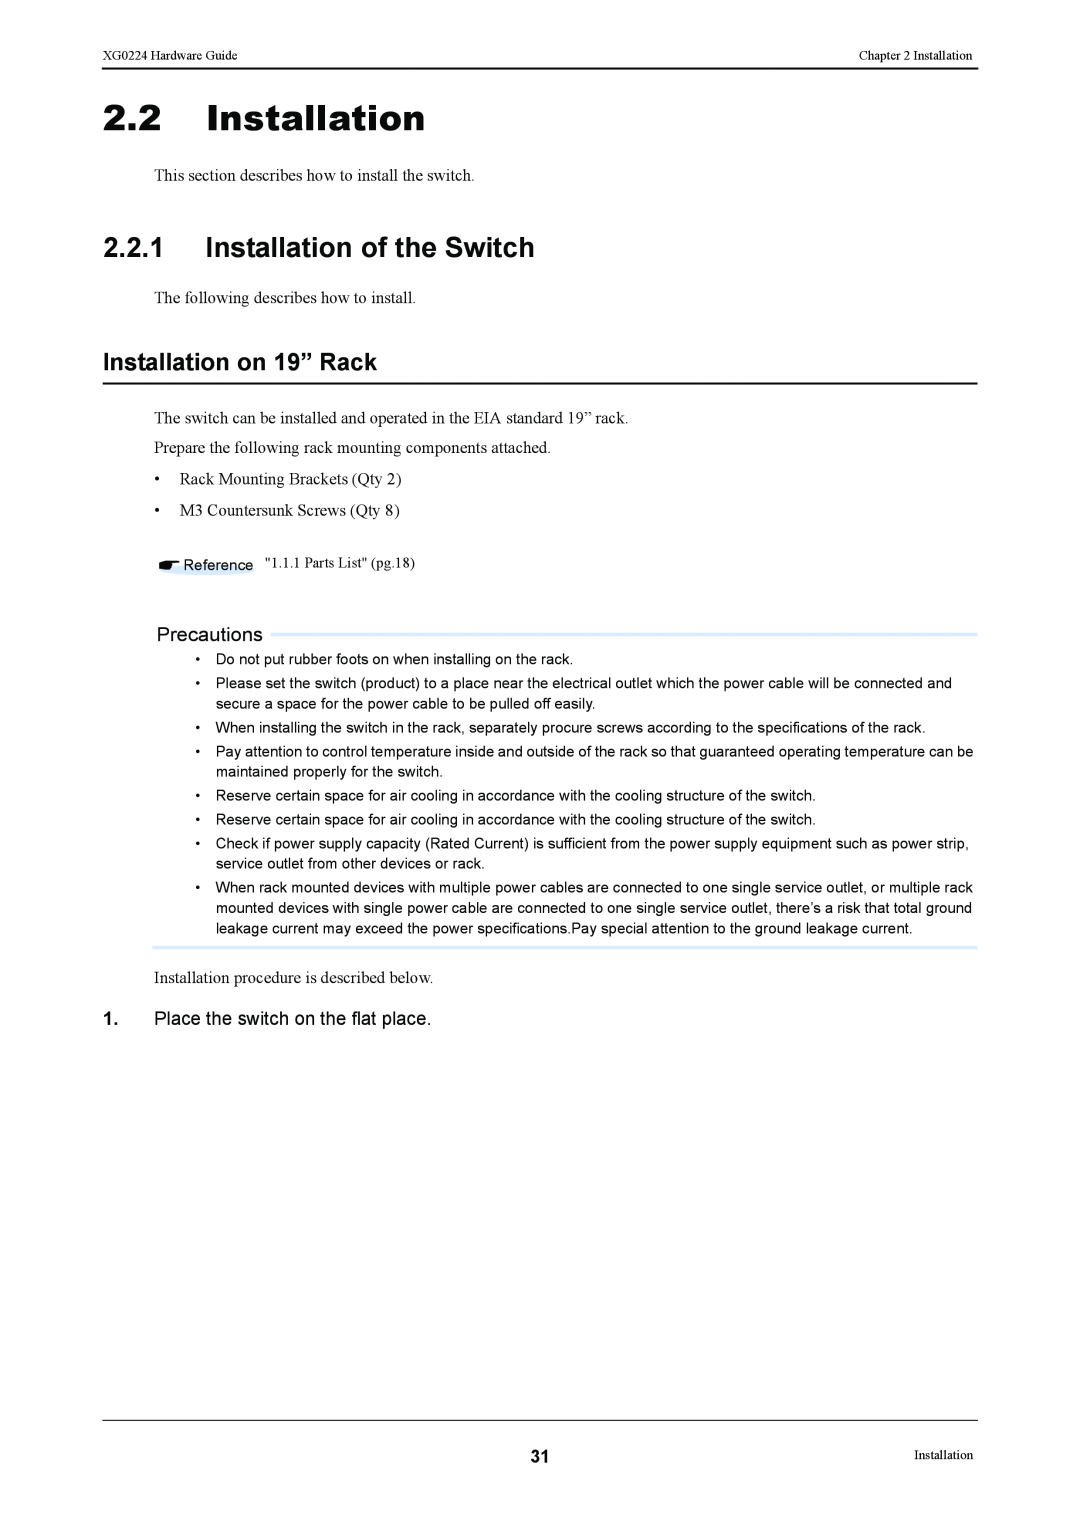 Fujitsu XG0224 manual Installation of the Switch, Installation on 19” Rack 